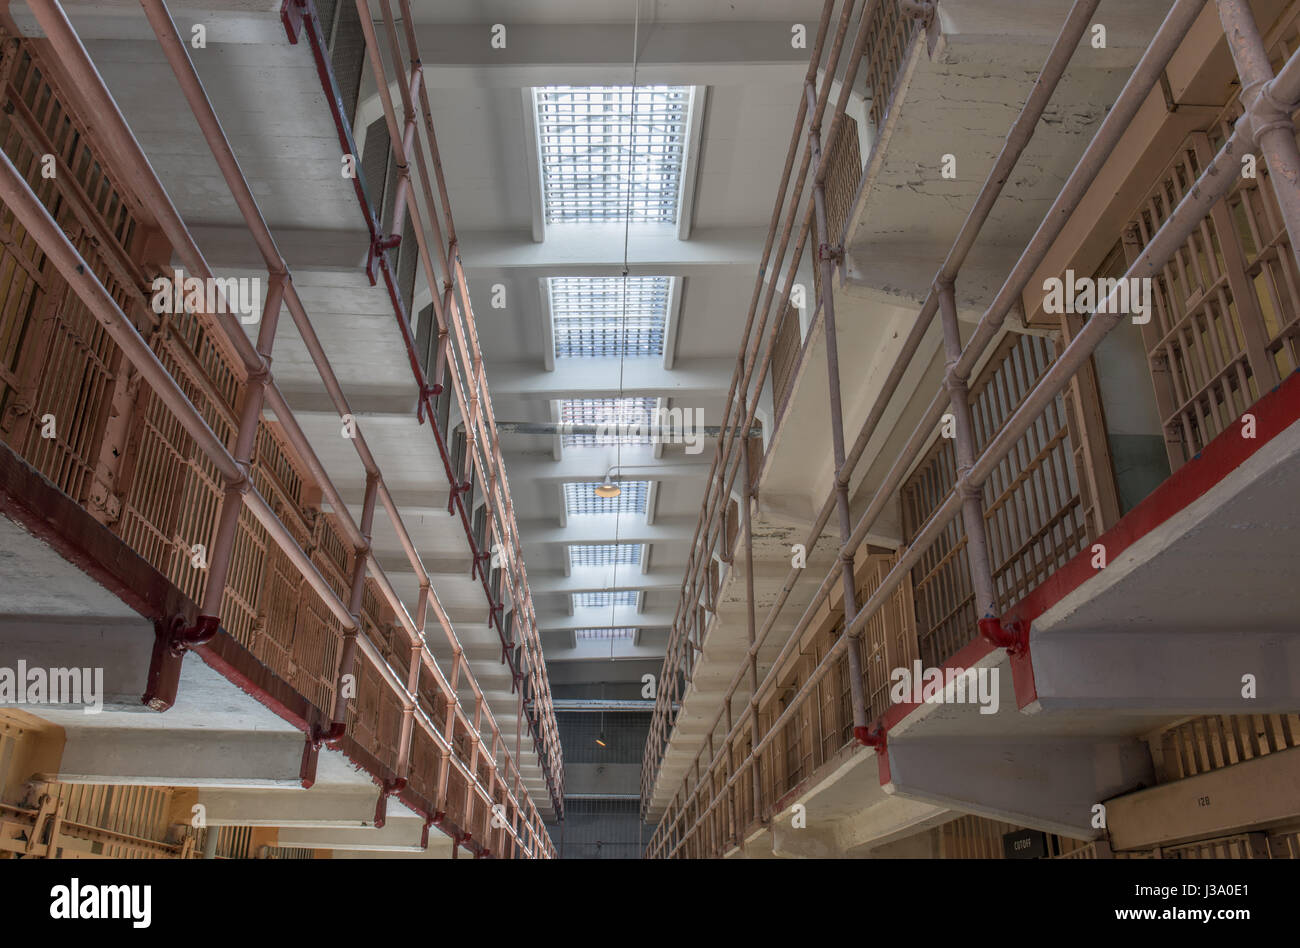 San Francisco, California, Vereinigte Staaten von Amerika - 30. April 2017: Zellenblock der Gefängnis Alcatraz. Stockfoto